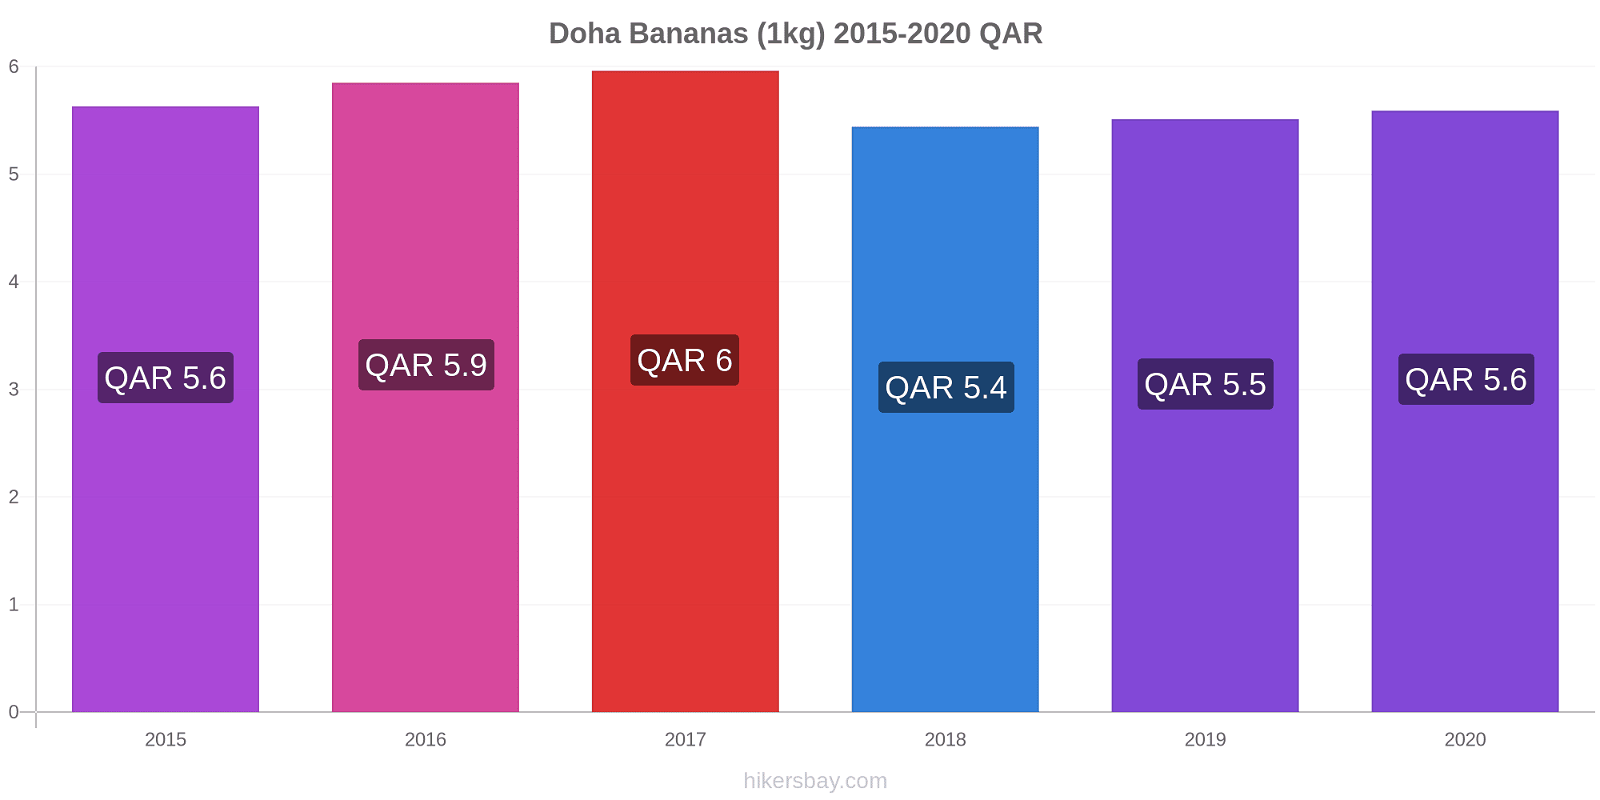 Doha price changes Bananas (1kg) hikersbay.com